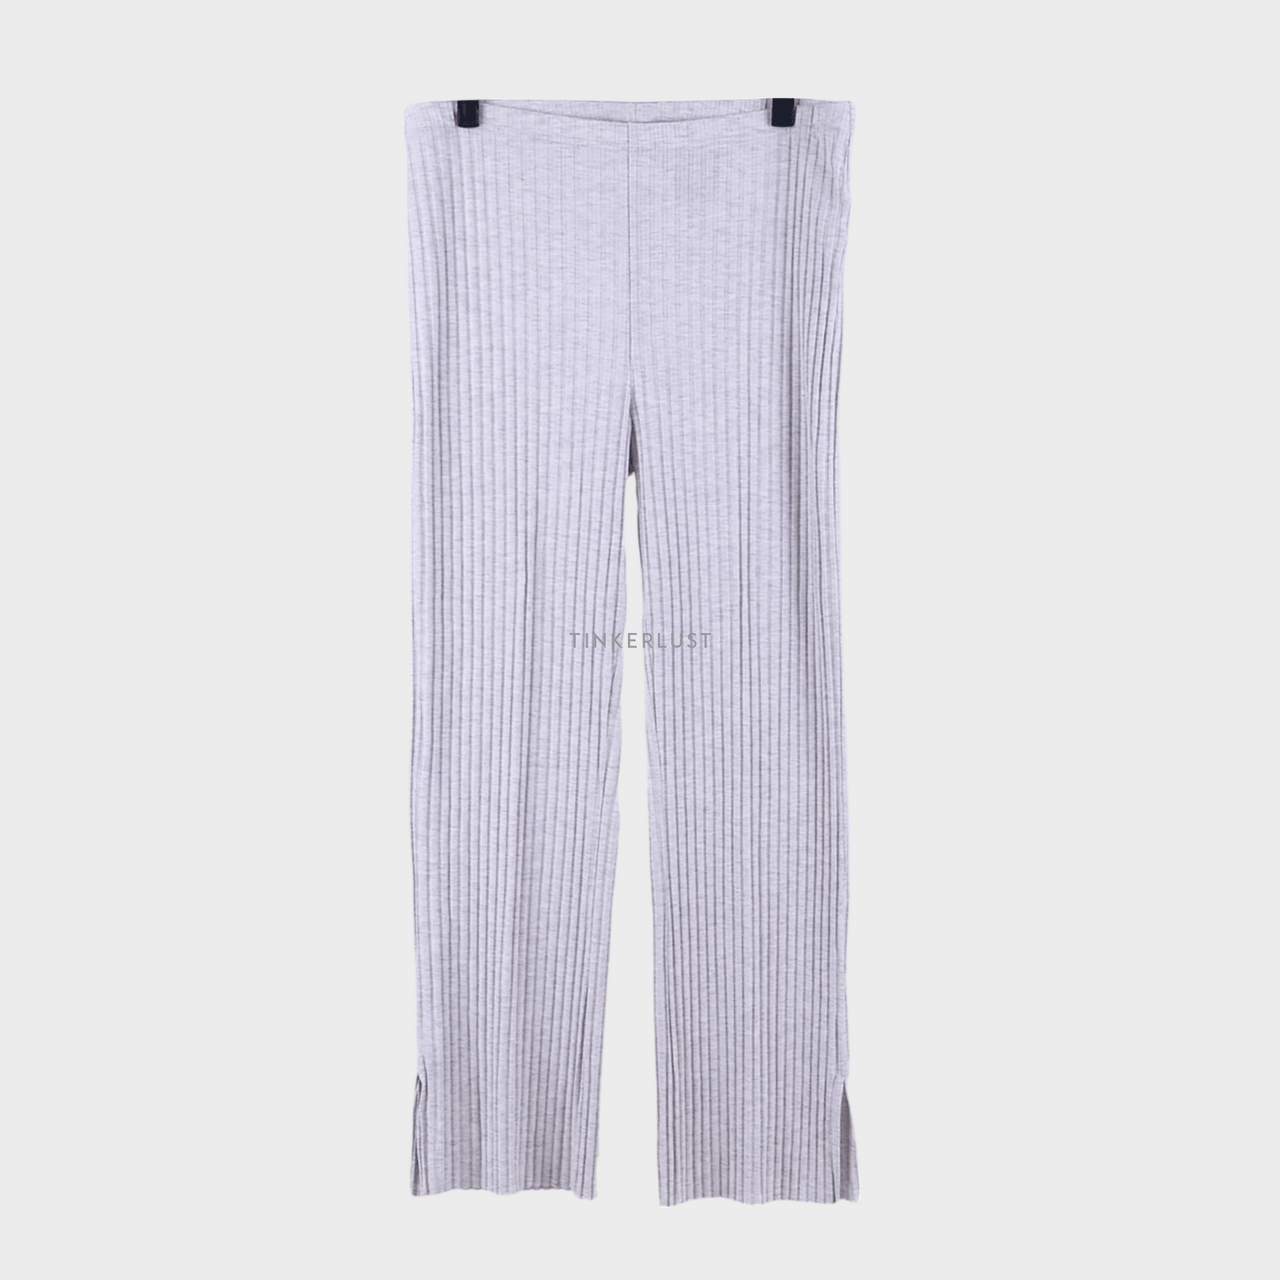 H&M Light Grey Long Pants